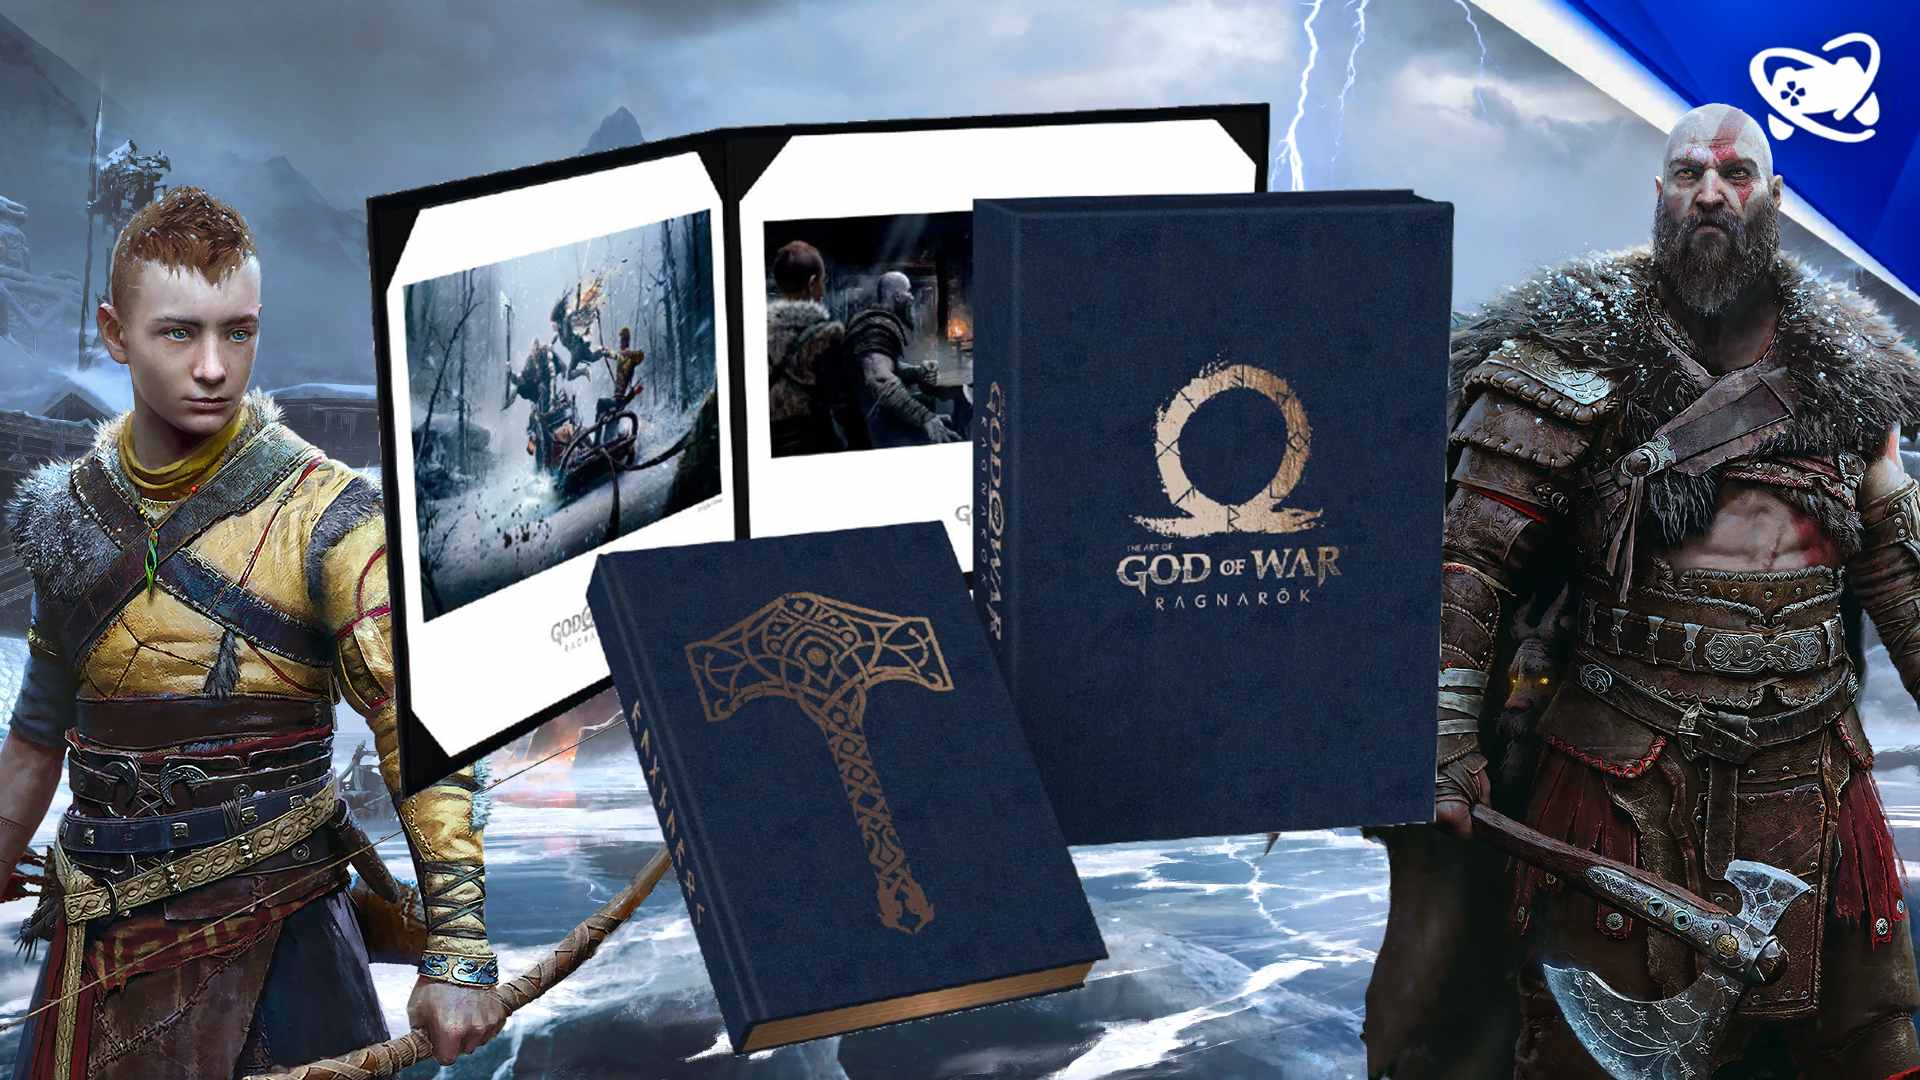 The Art of God of War: Ragnarok chega em novembro